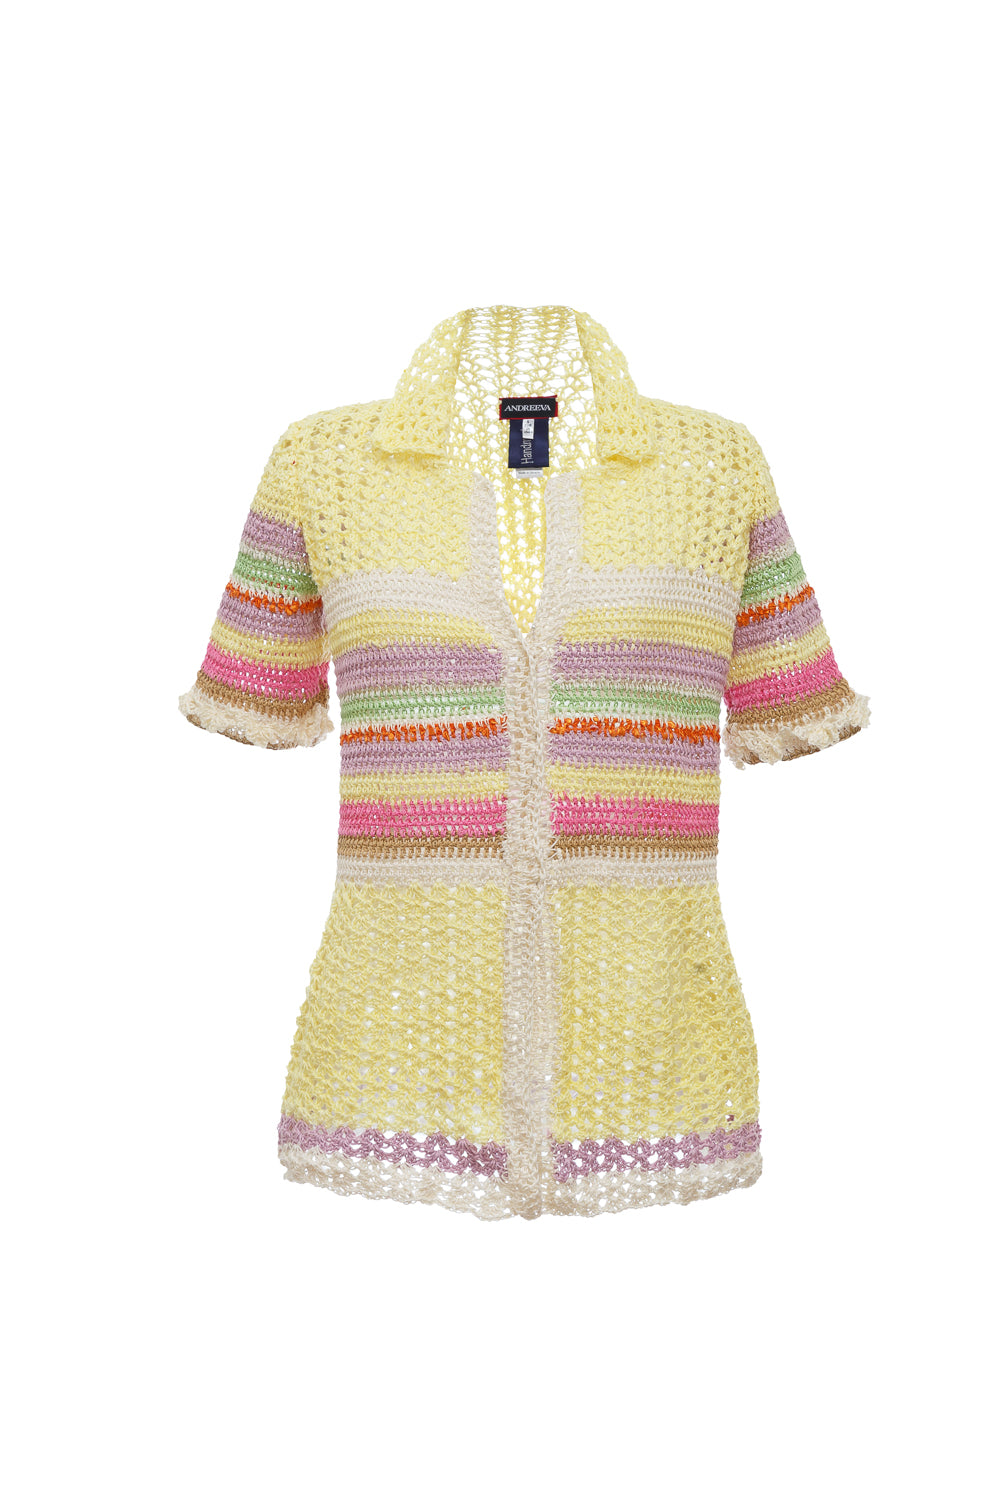 andreeva multicolor crochet women's shirt